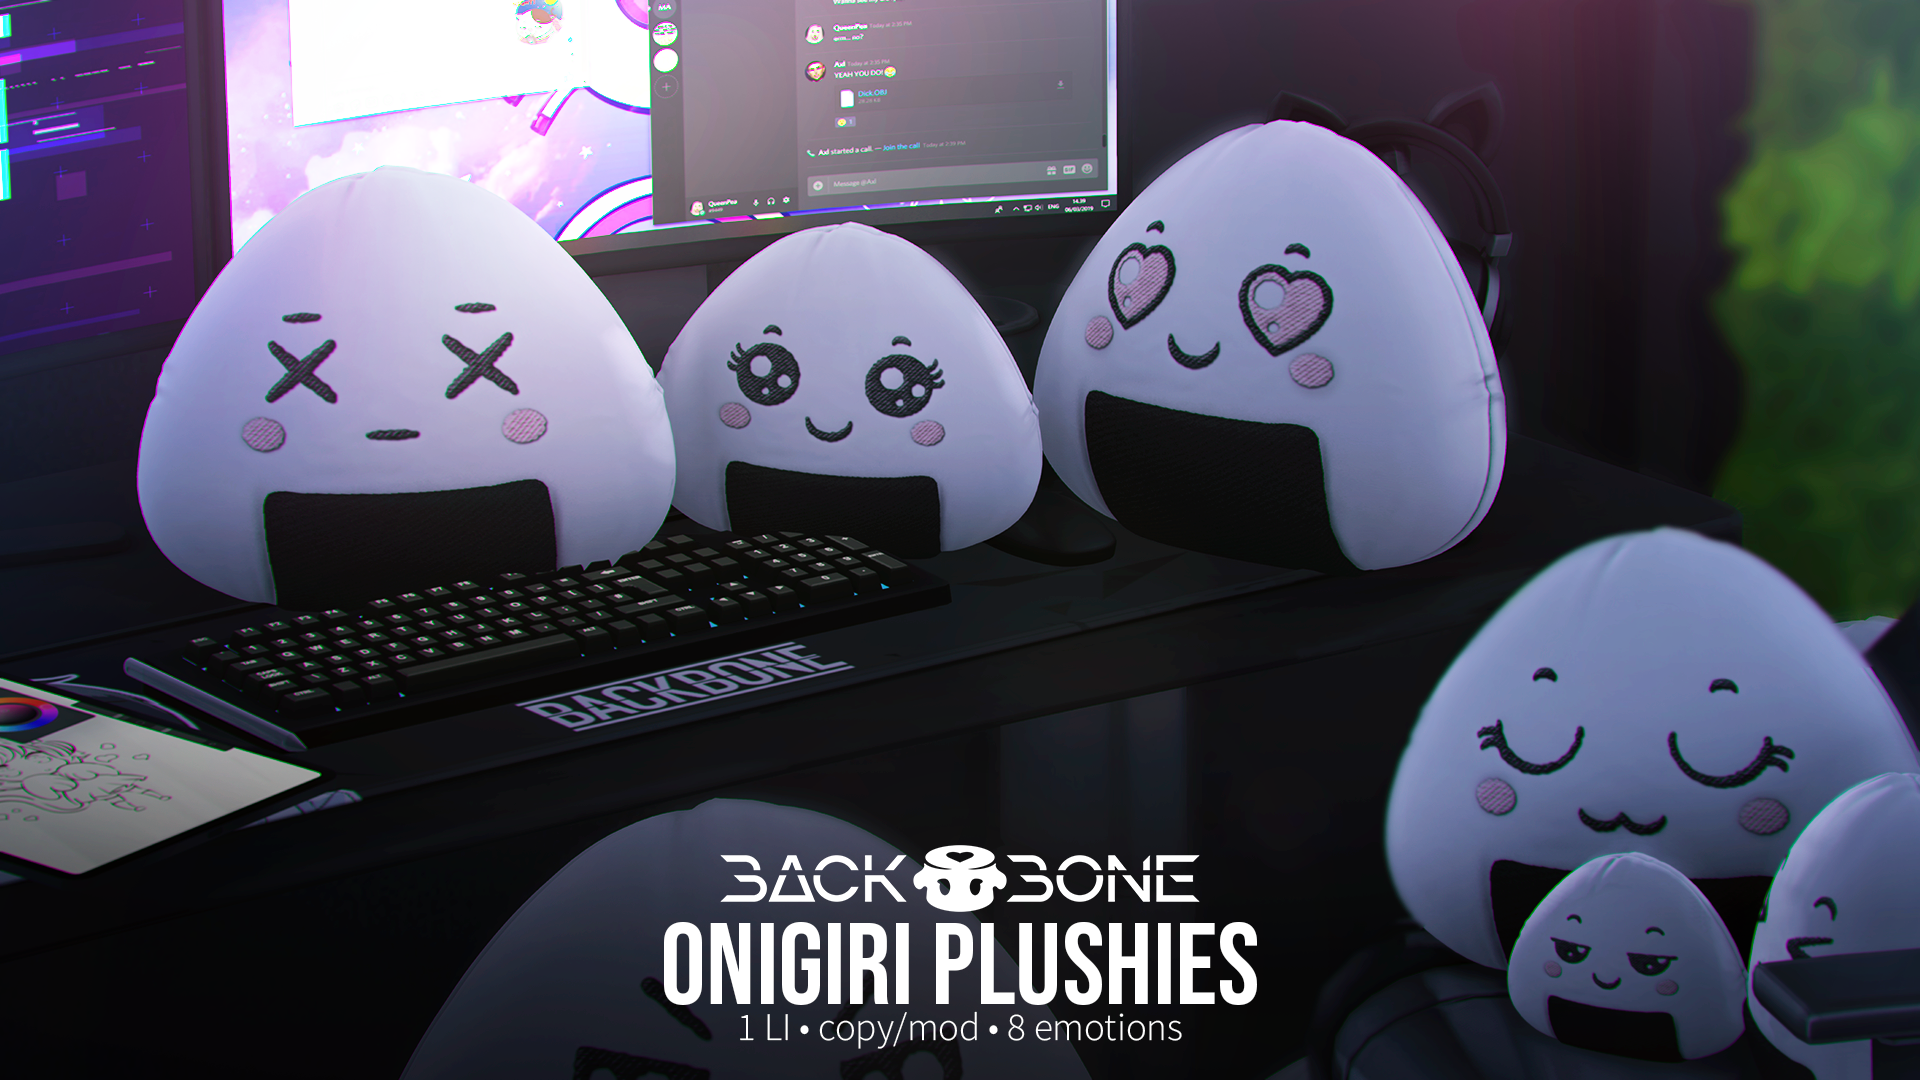 BackBone – Onigiri Plushies